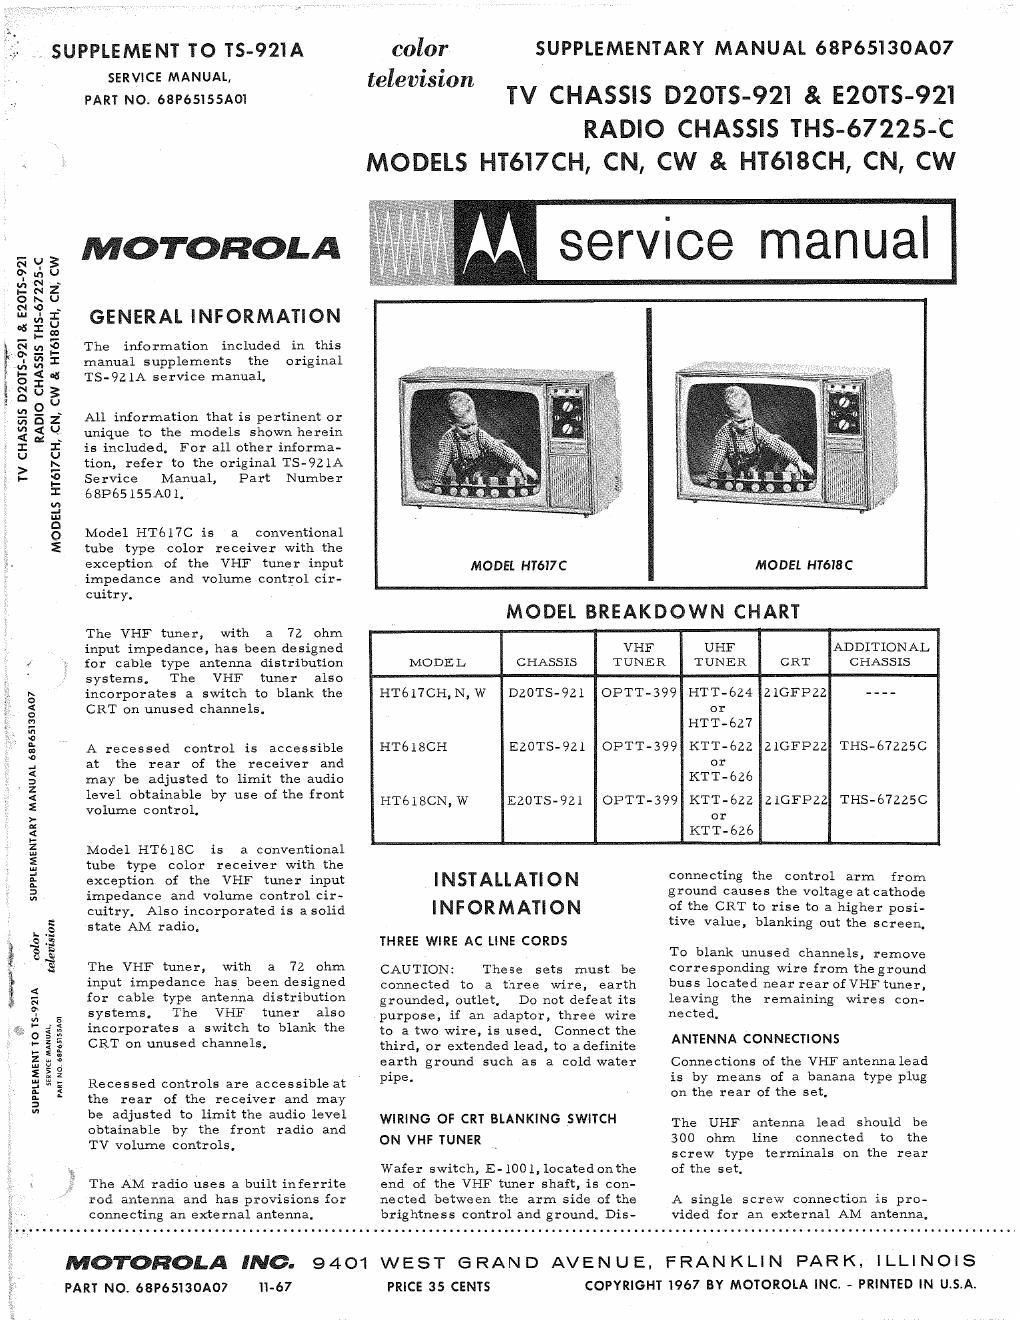 motorola ht 618 ch service manual